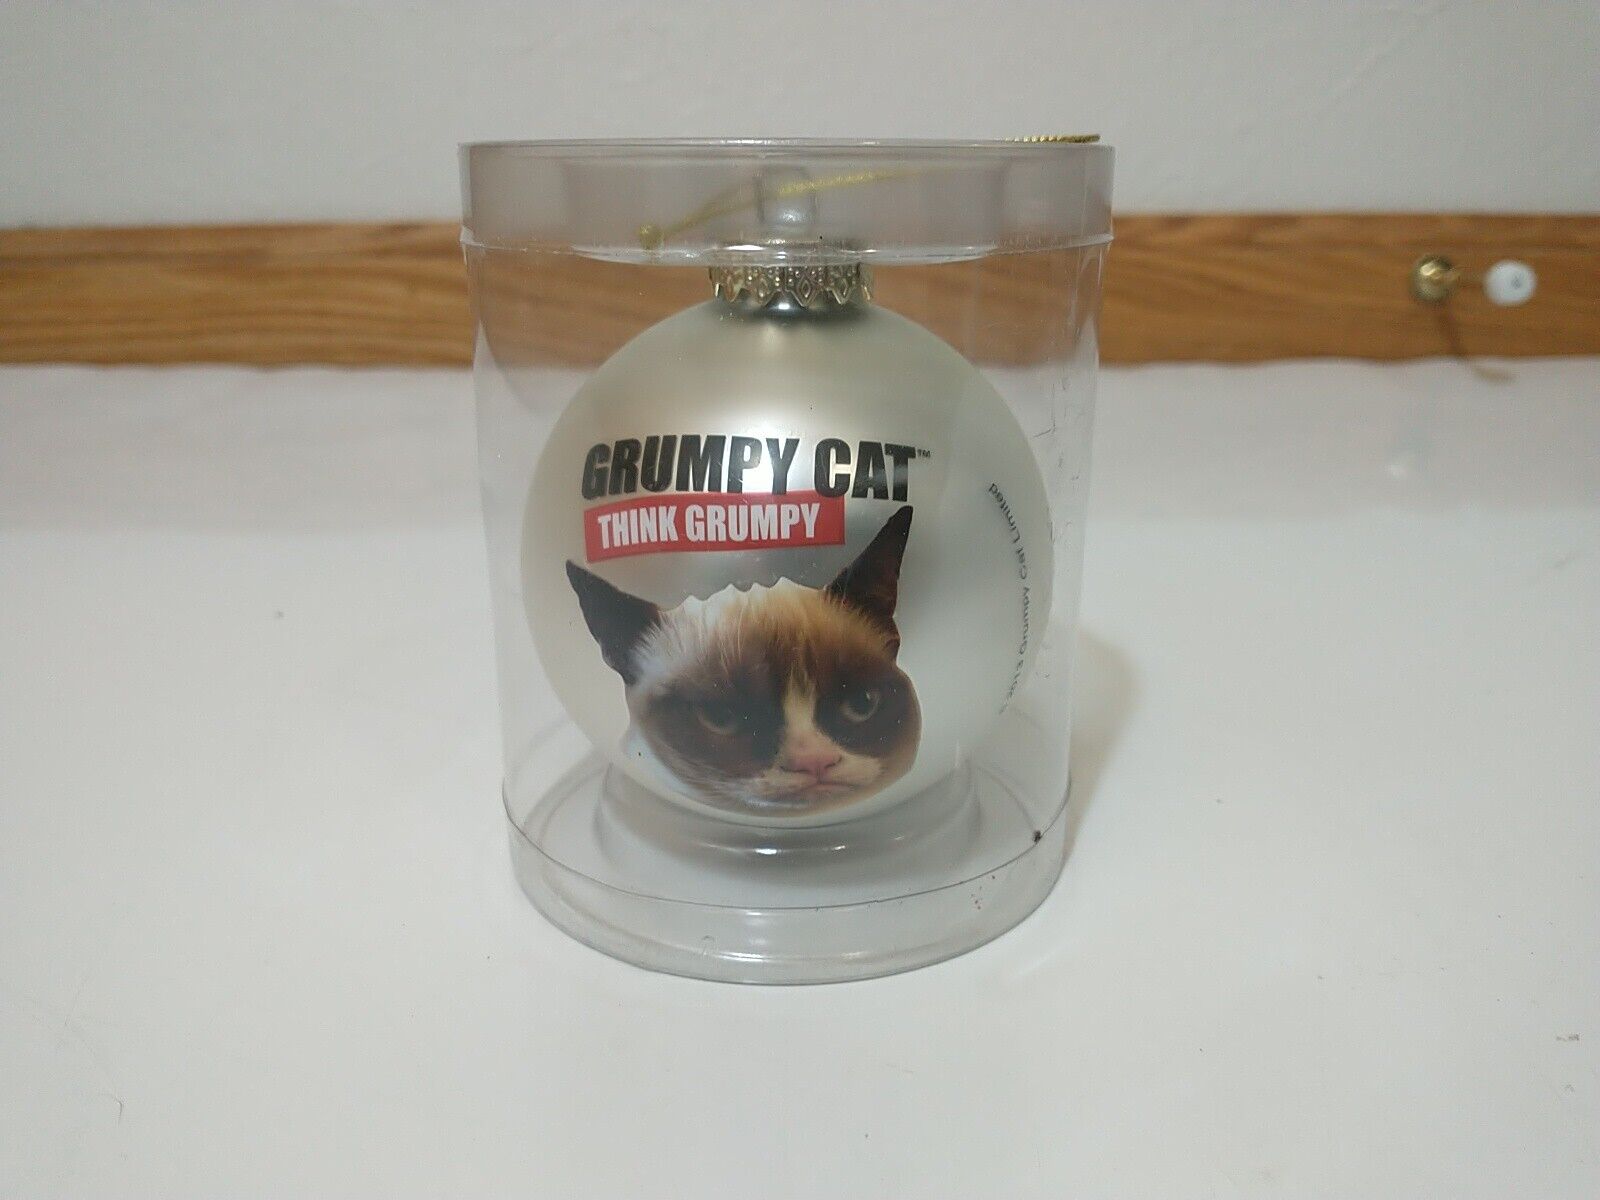 Grumpy Cat Christmas Ornament THINK GRUMPY Ganz 2013 Glass Ball New In Package